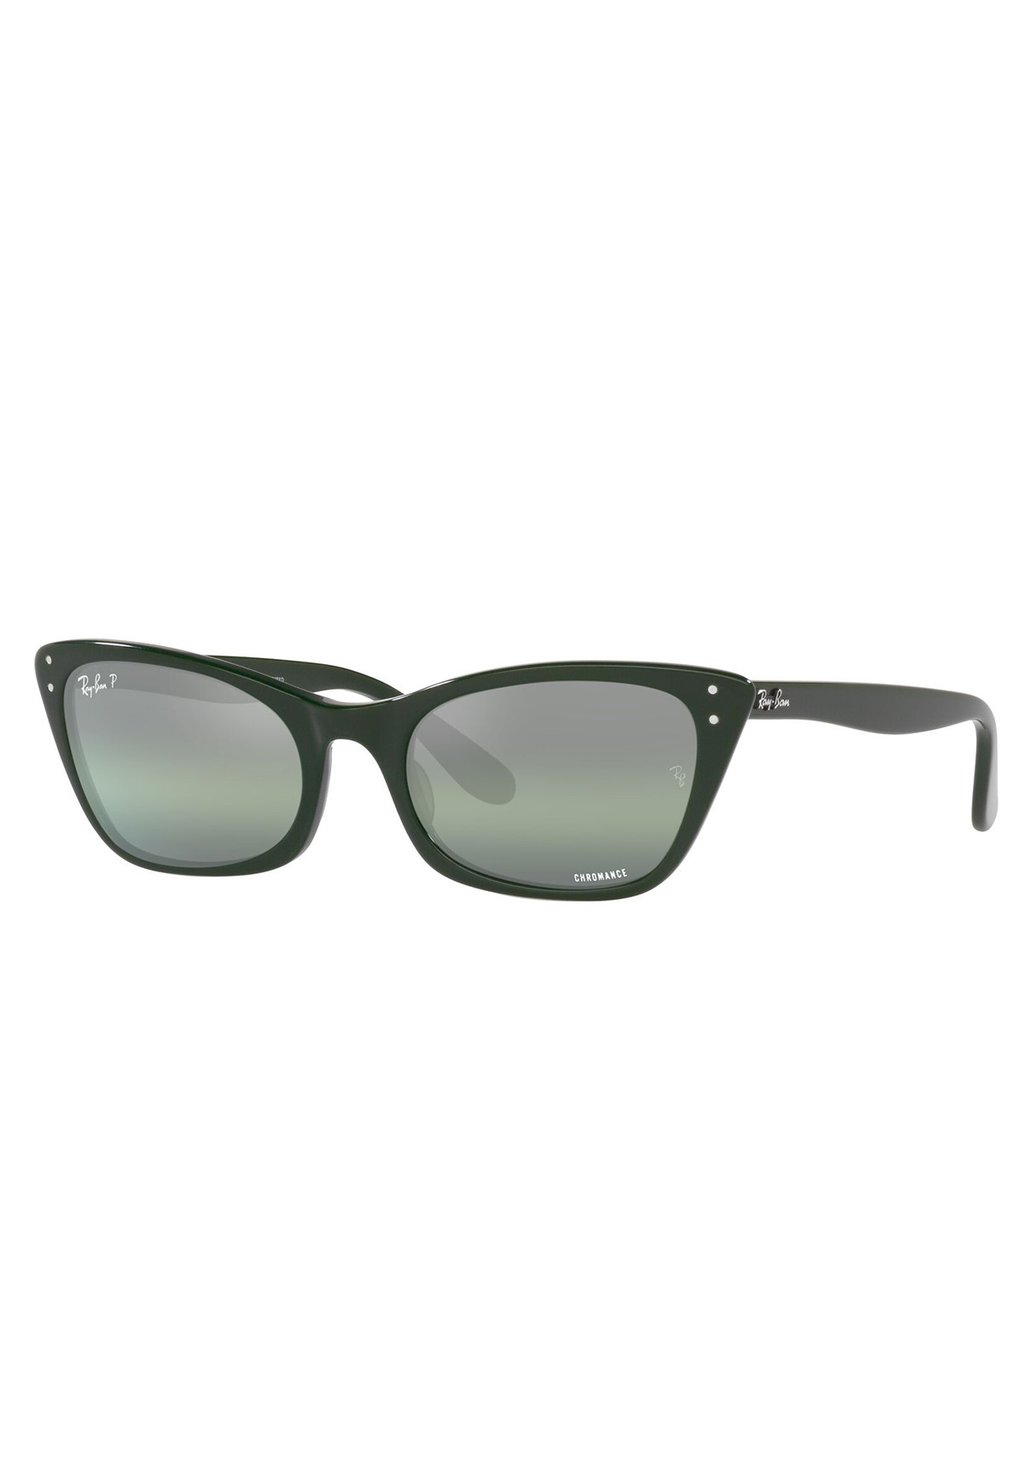 горошек green ray 450 г Солнцезащитные очки Polarizzati Ray-Ban, зеленый